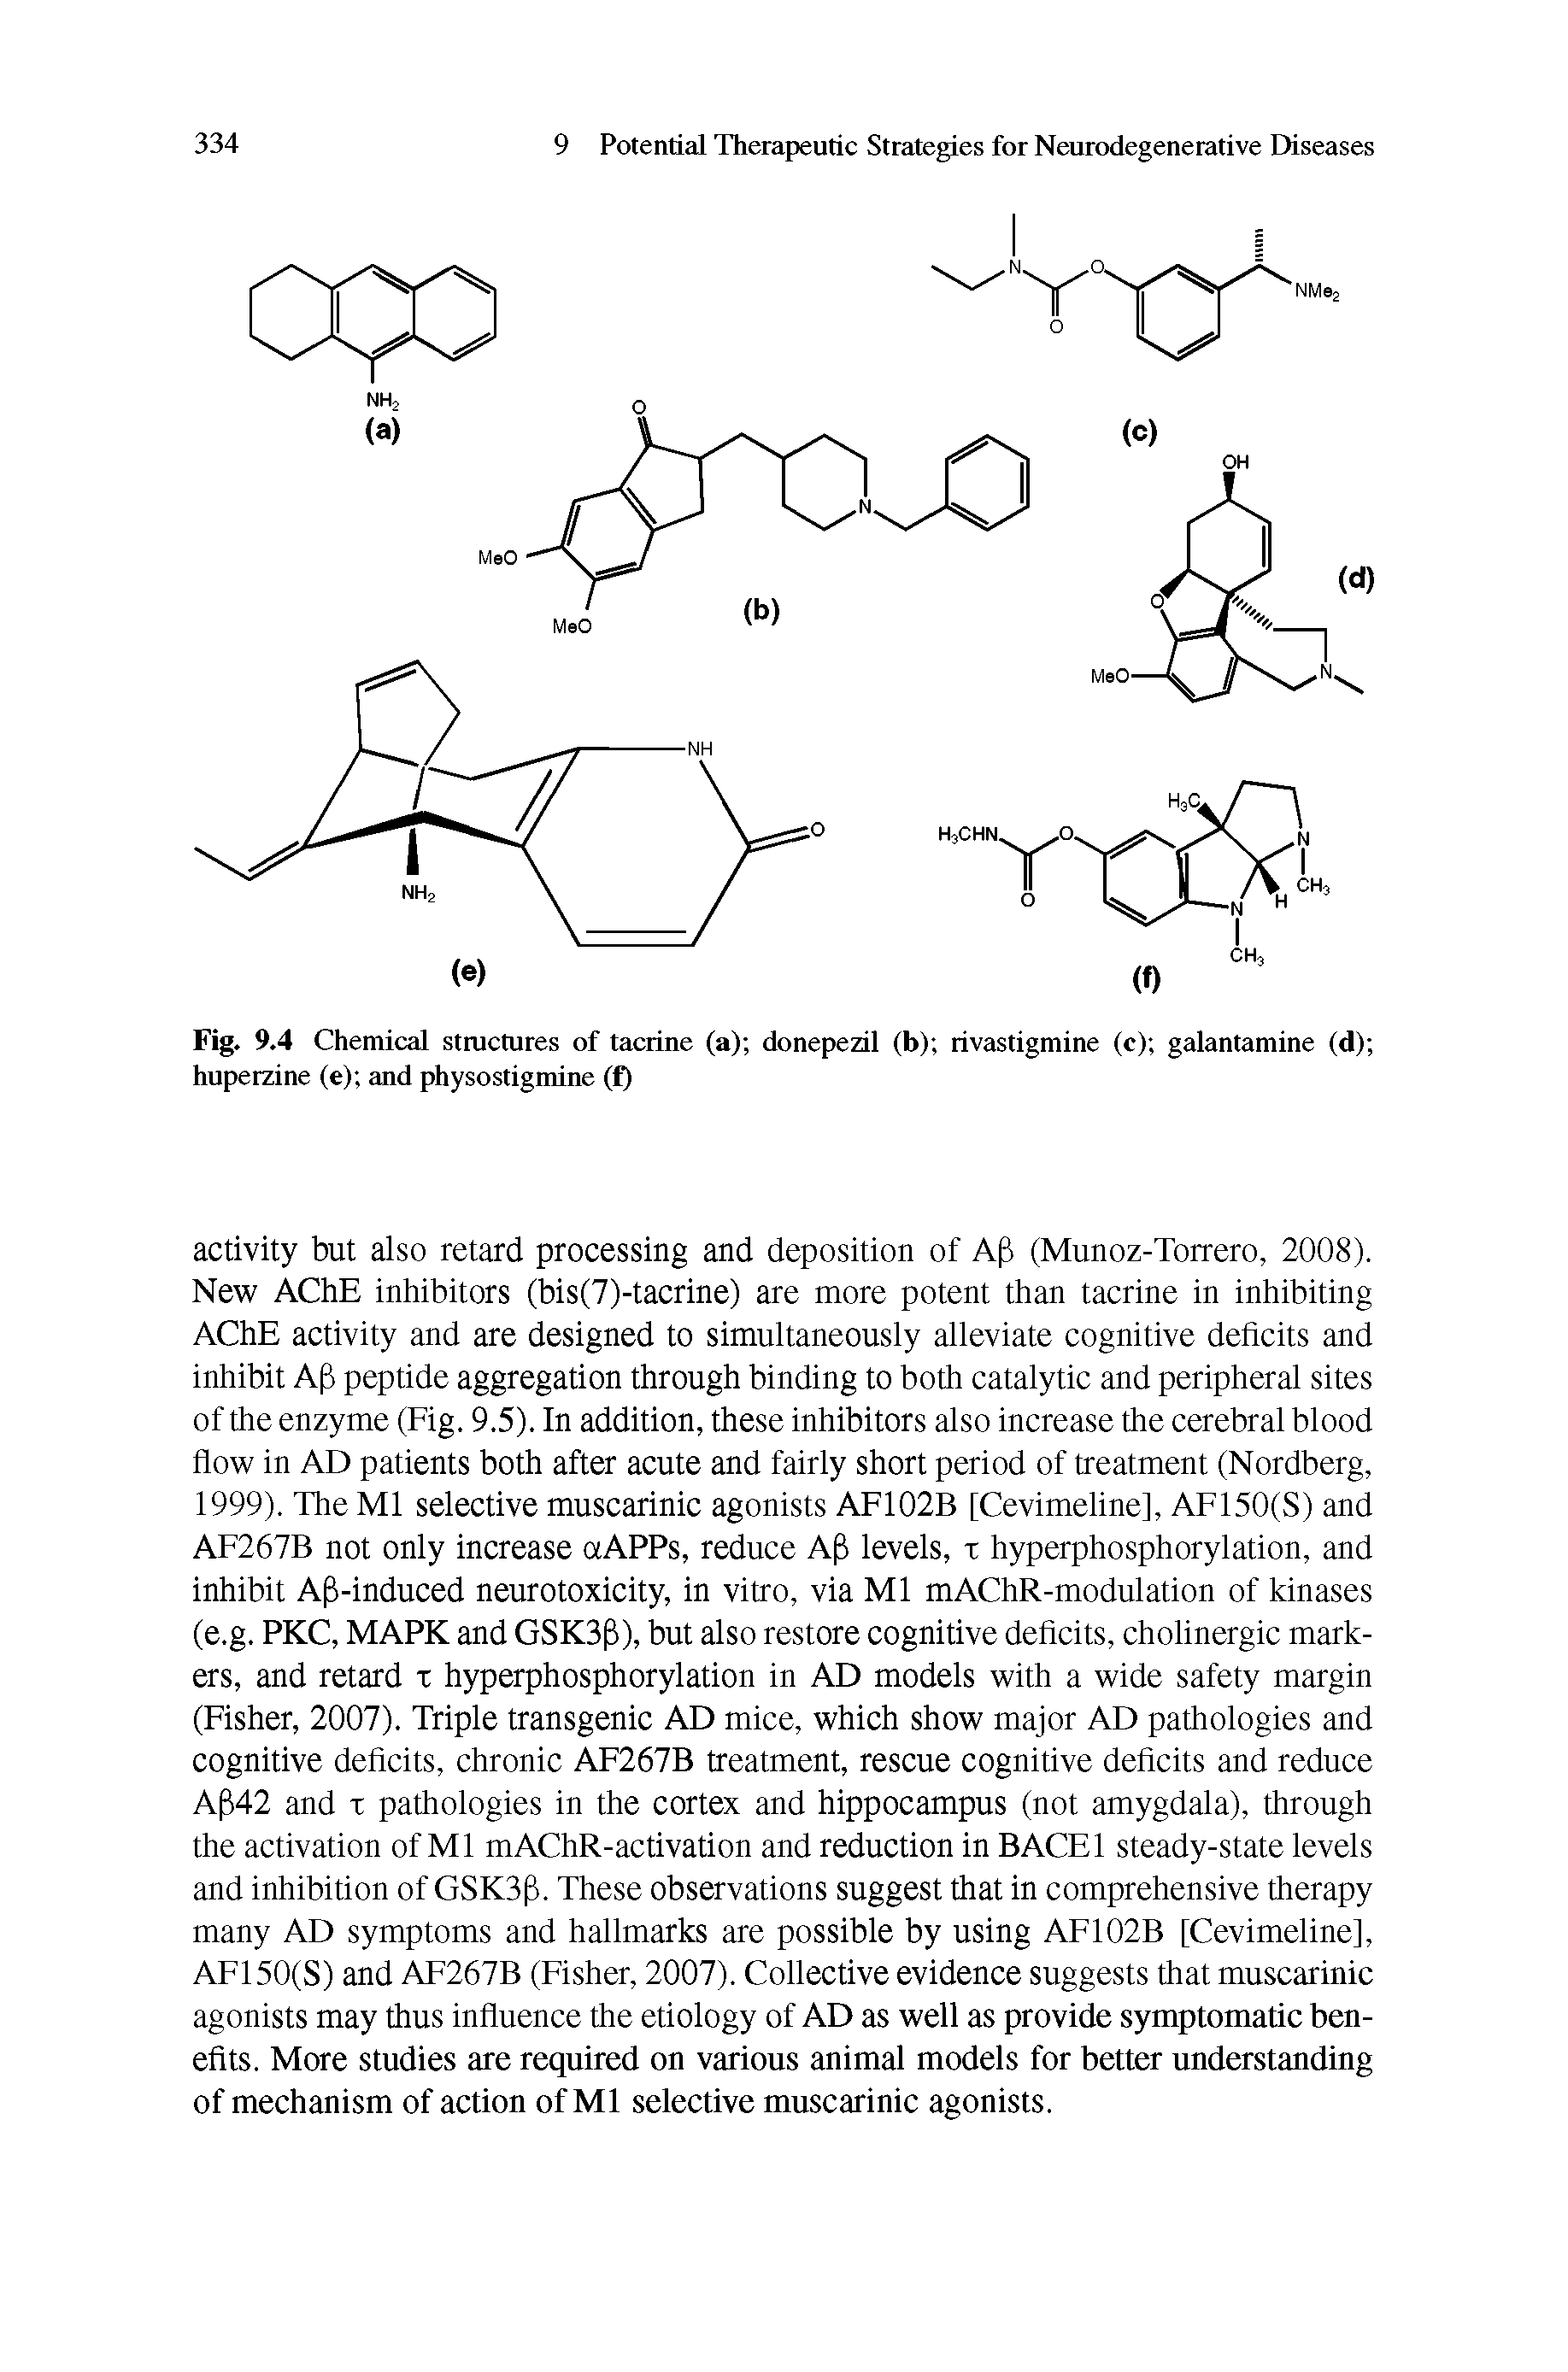 Fig. 9.4 Chemical structures of tacrine (a) donepezil (b) rivastigmine (c) galantamine (d) huperzine (e) and physostigmine (f)...